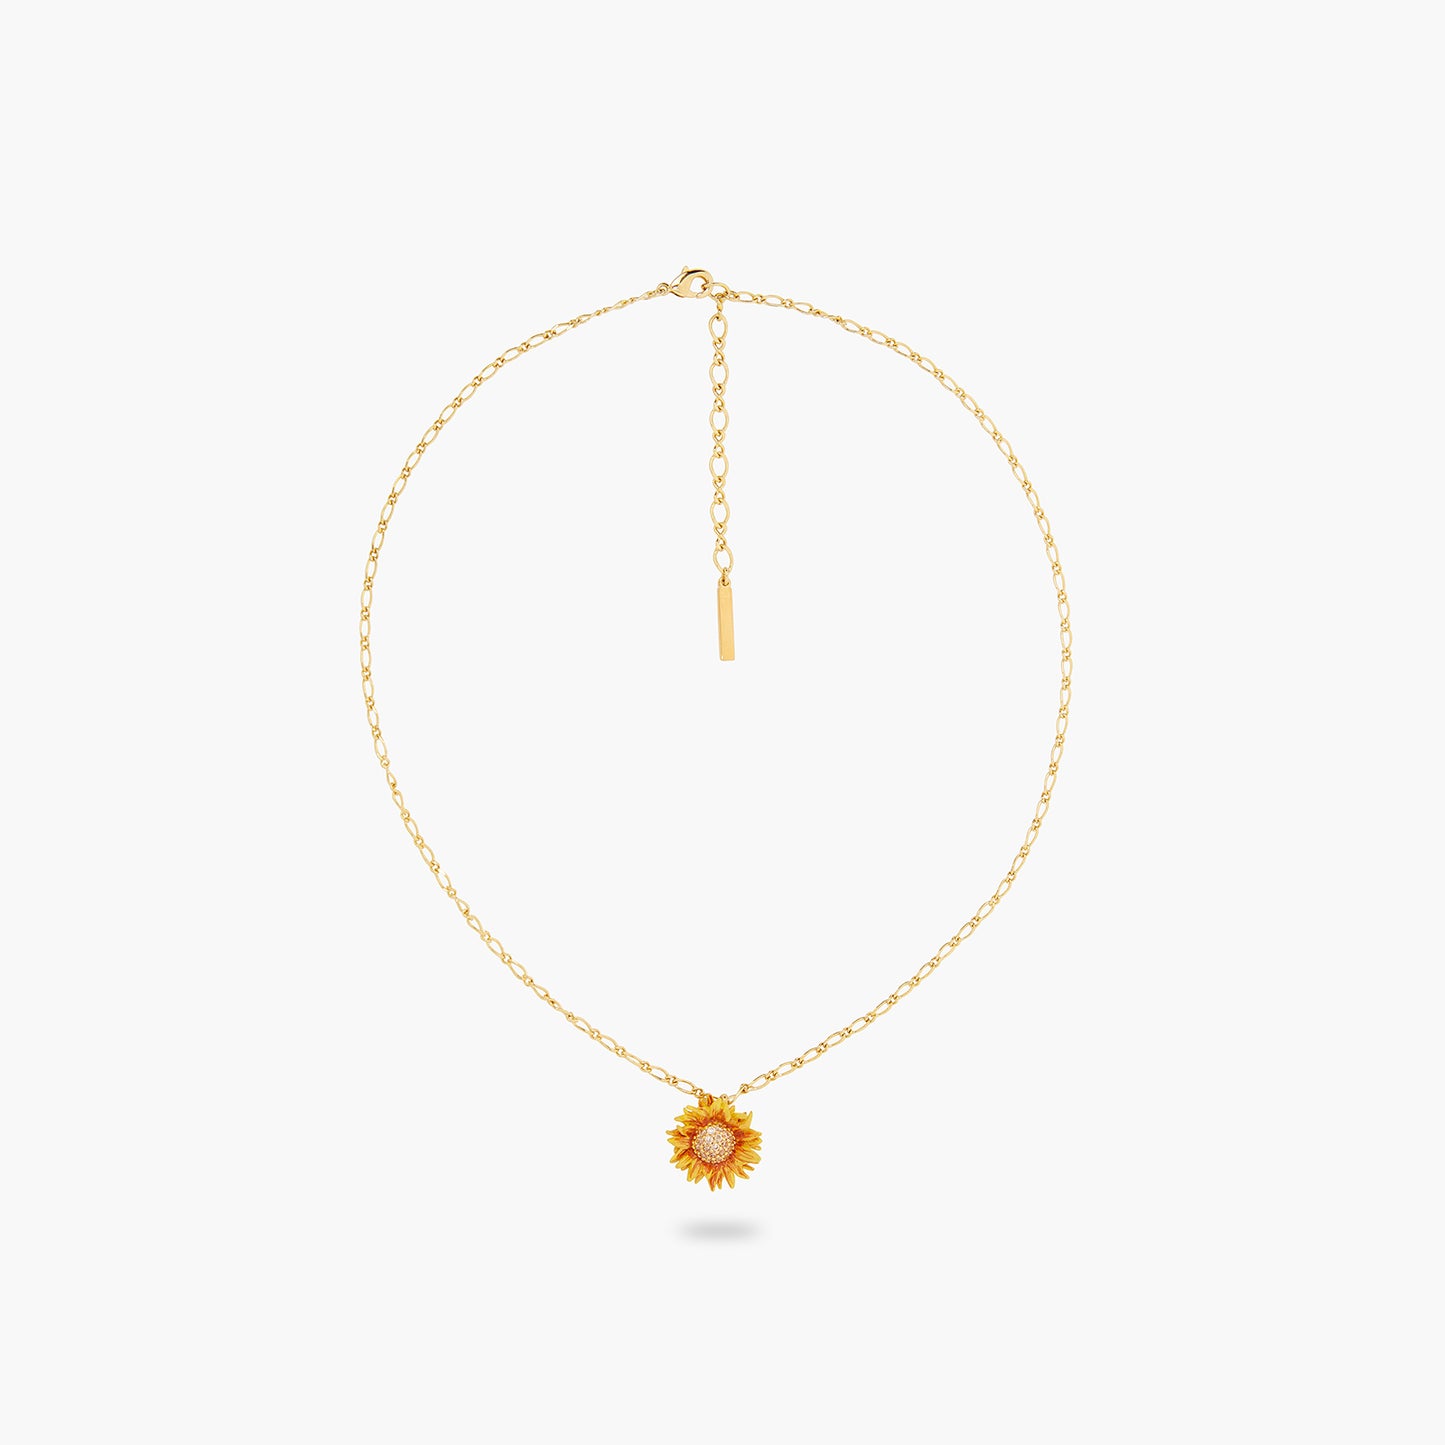 Sunflower Pendant Necklace | ATPO3061